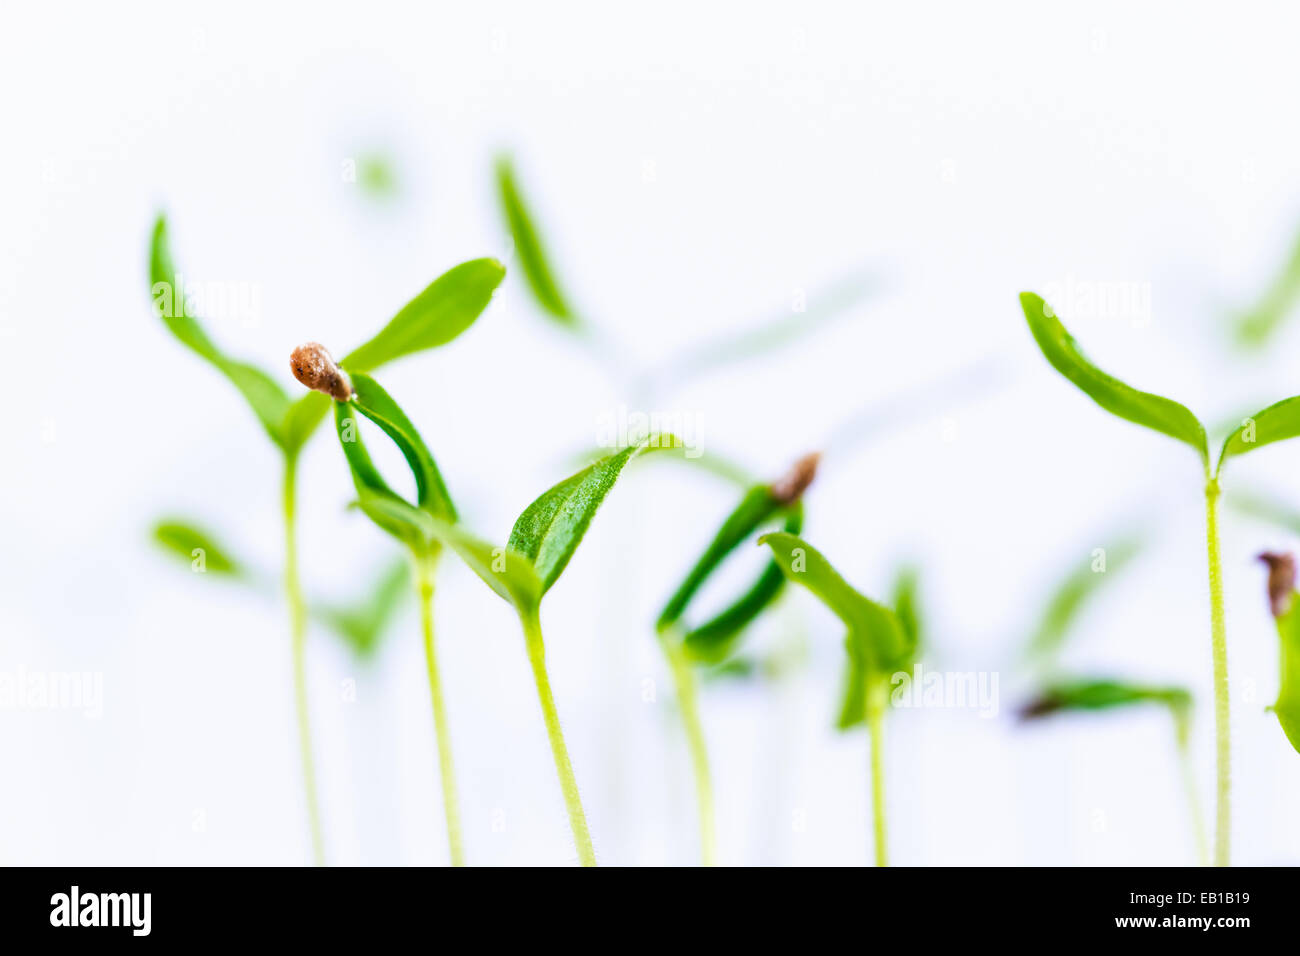 Grüne Spross wächst aus Samen, Isolated On White Background. Frühling-Symbol, Konzept des neuen Lebens Stockfoto